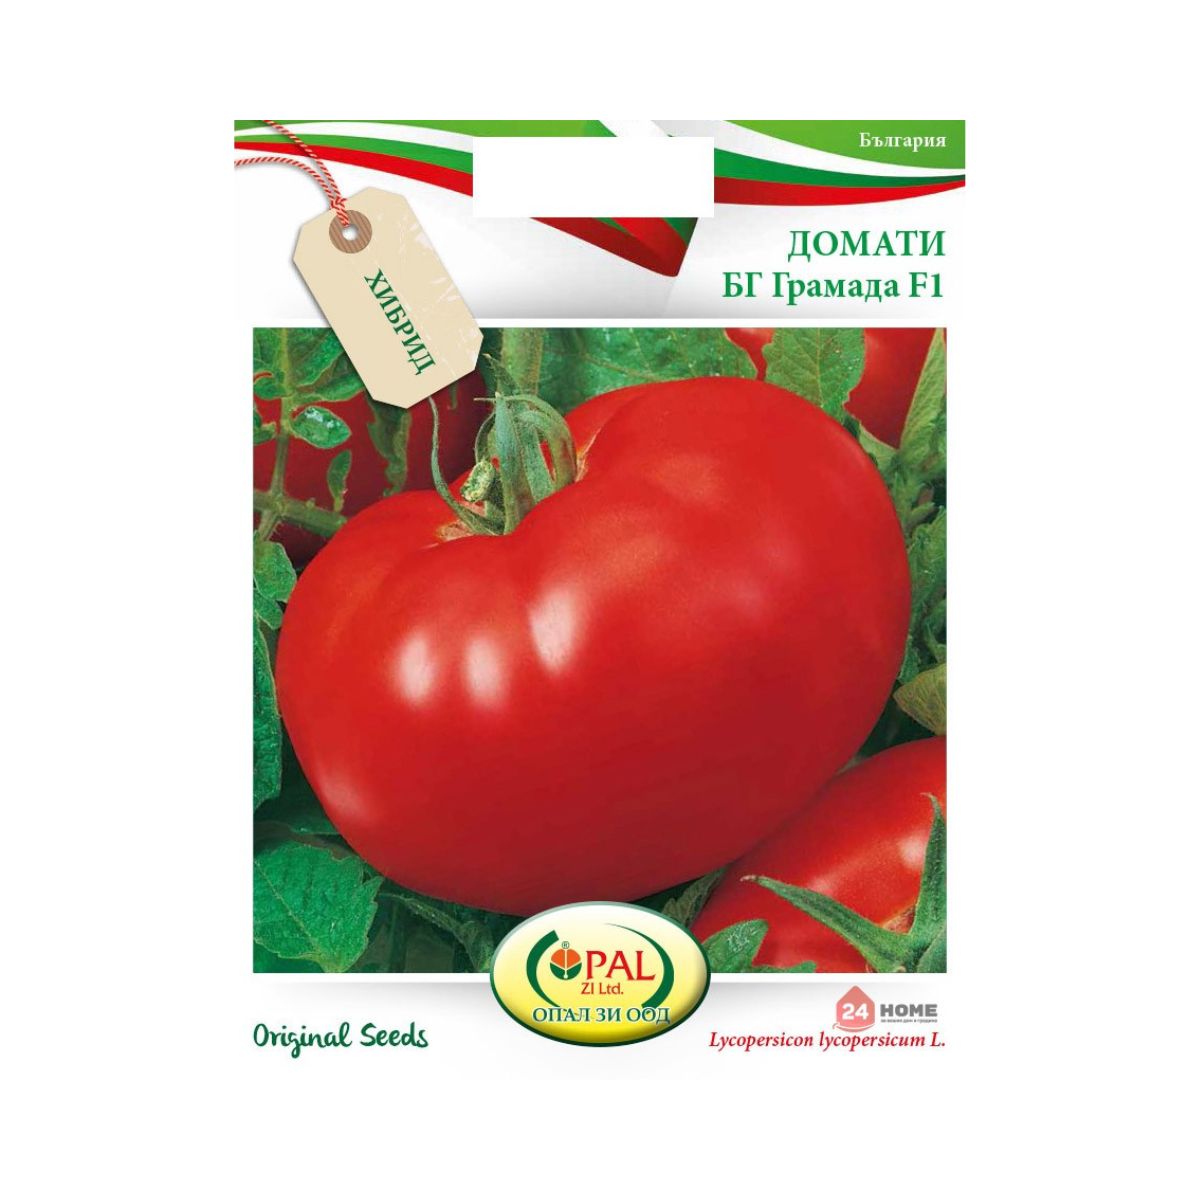 Tomate - Seminte de tomate BG Gramada F1, 0,2 grame OPAL, hectarul.ro